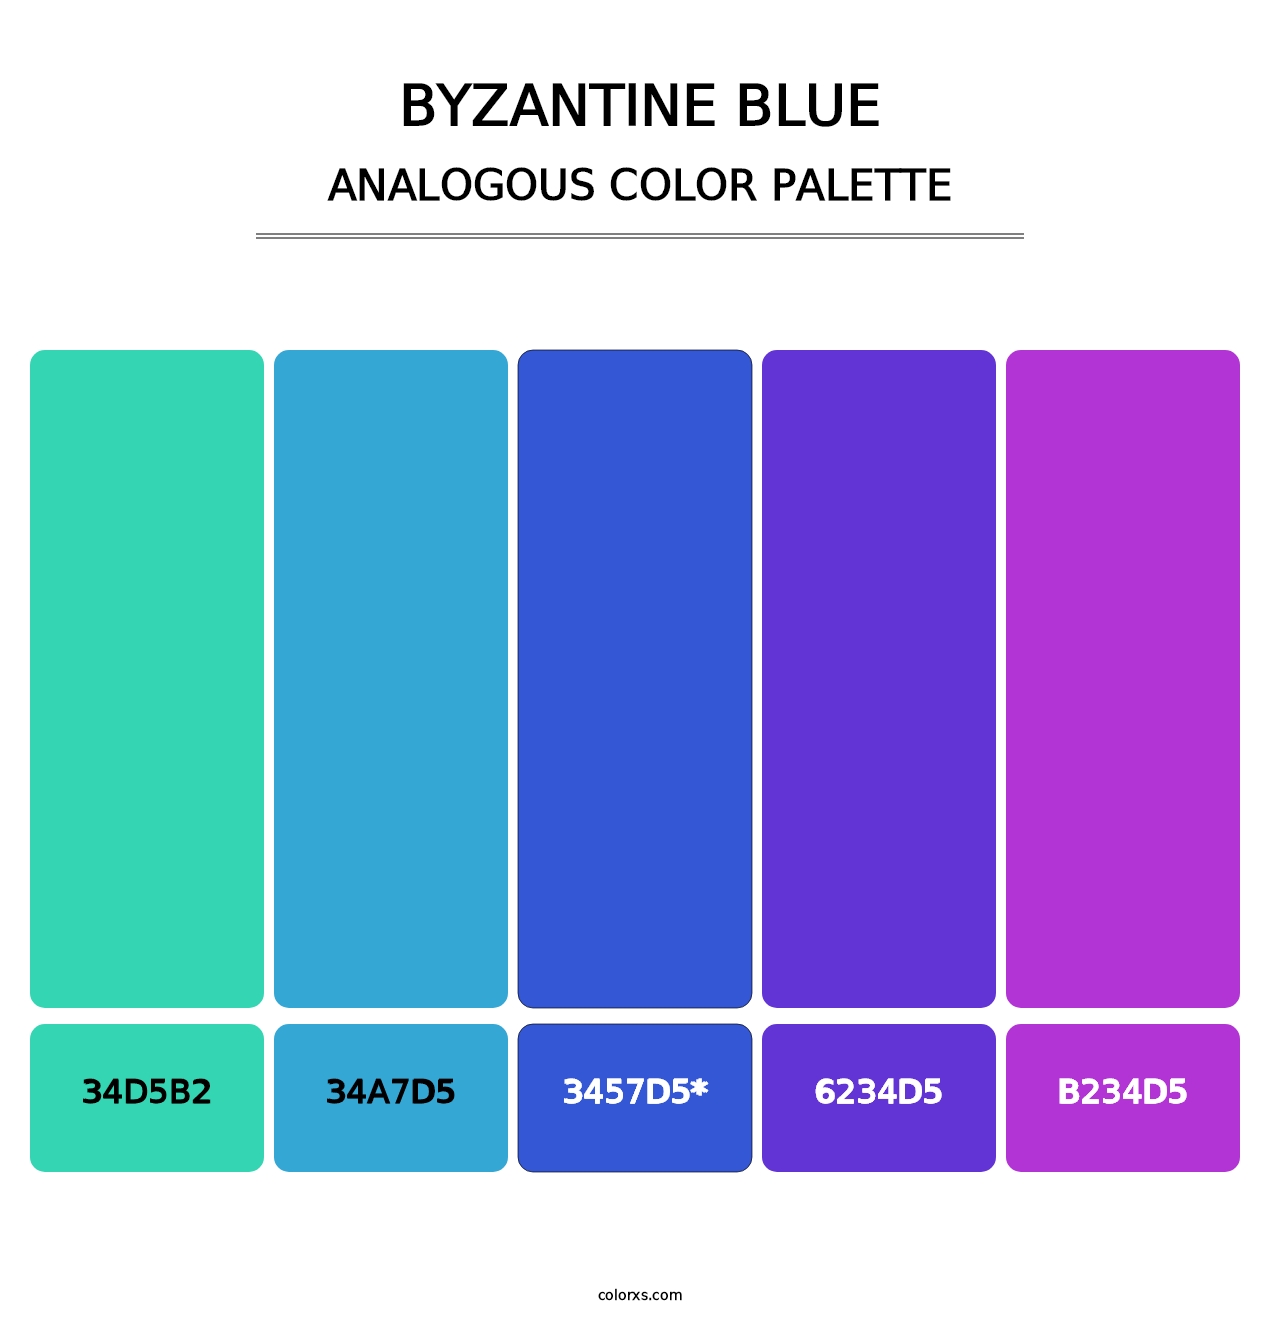 Byzantine Blue - Analogous Color Palette